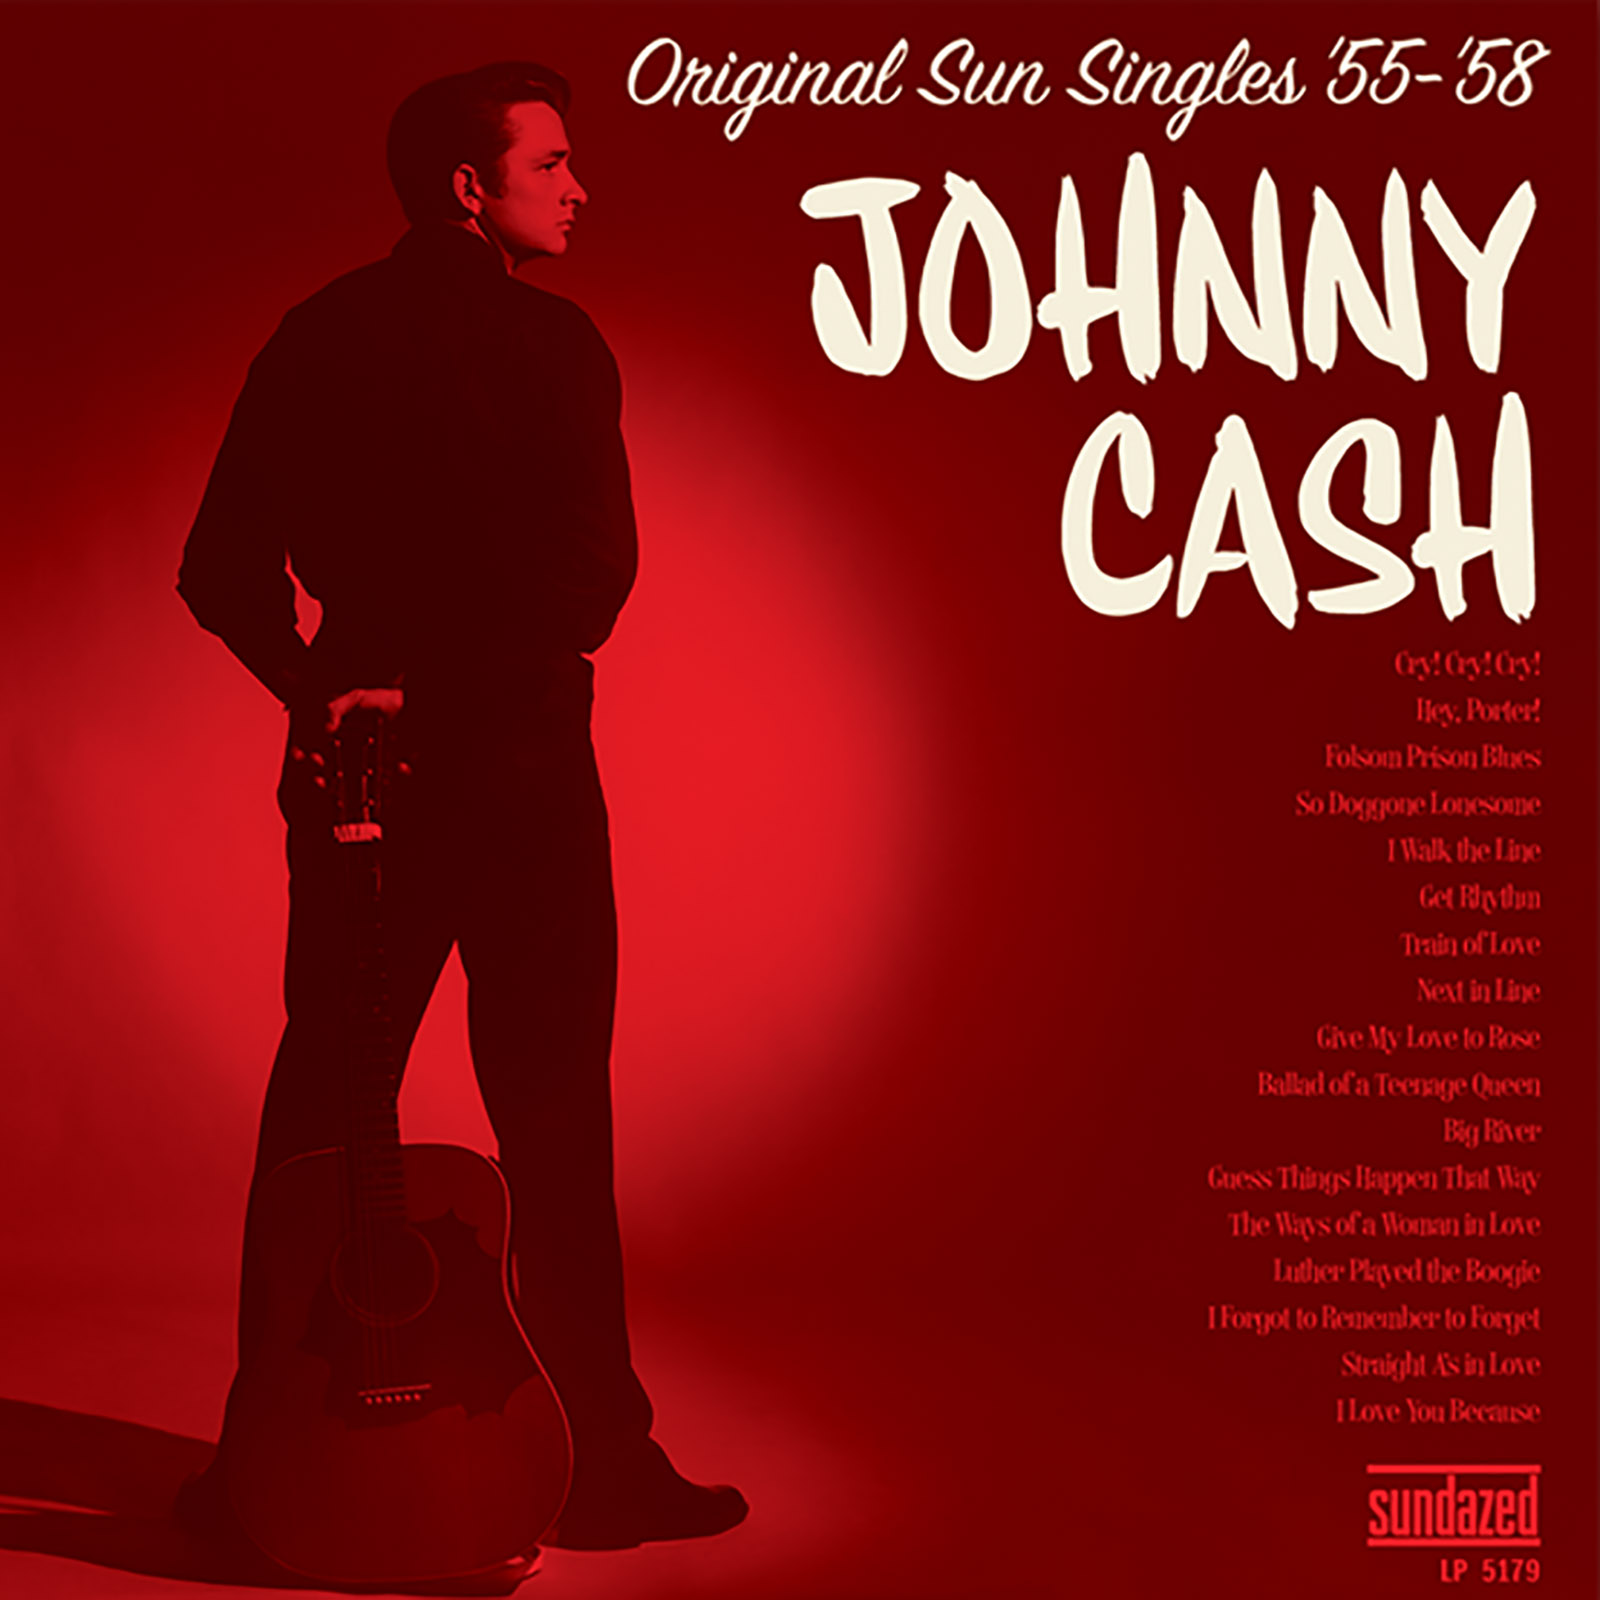 Johnny Cash - Original Sun Singles ´55-´58 (Mono 180g) - 2 x LP